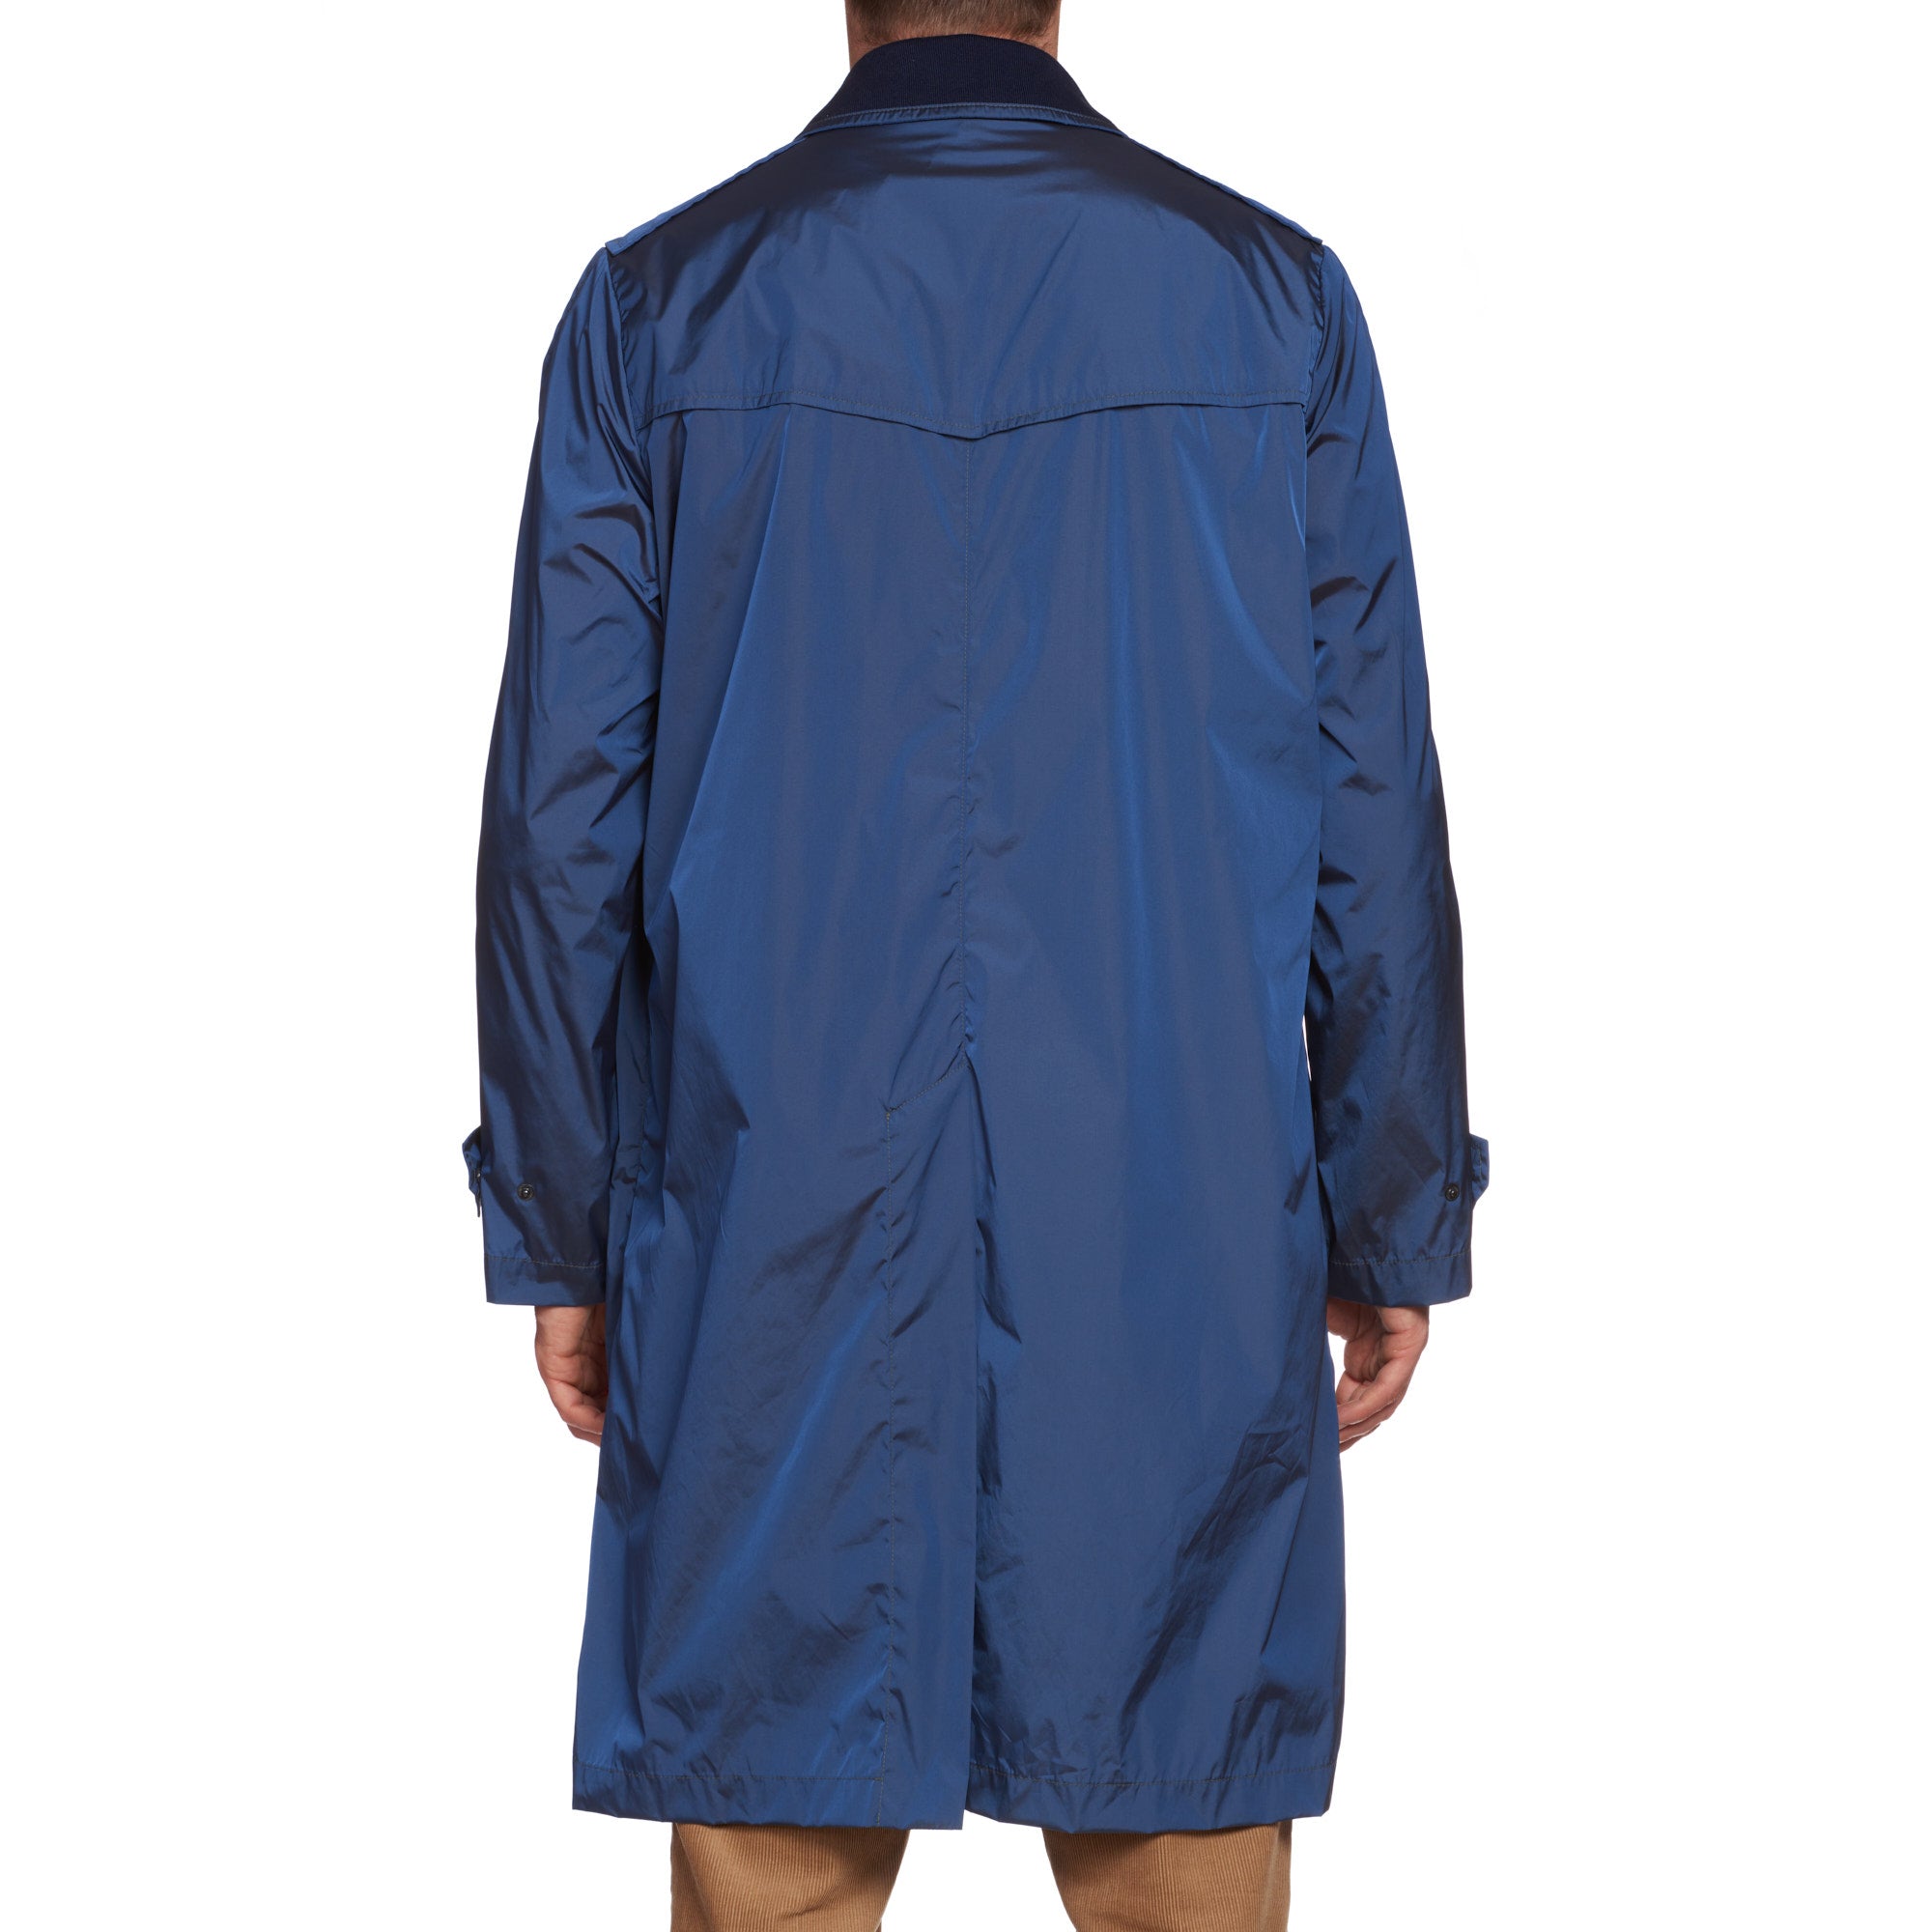 BOGLIOLI Milano "Wear" Navy Blue Unlined Lightweight Rain Coat EU 52 NEW US 42 BOGLIOLI